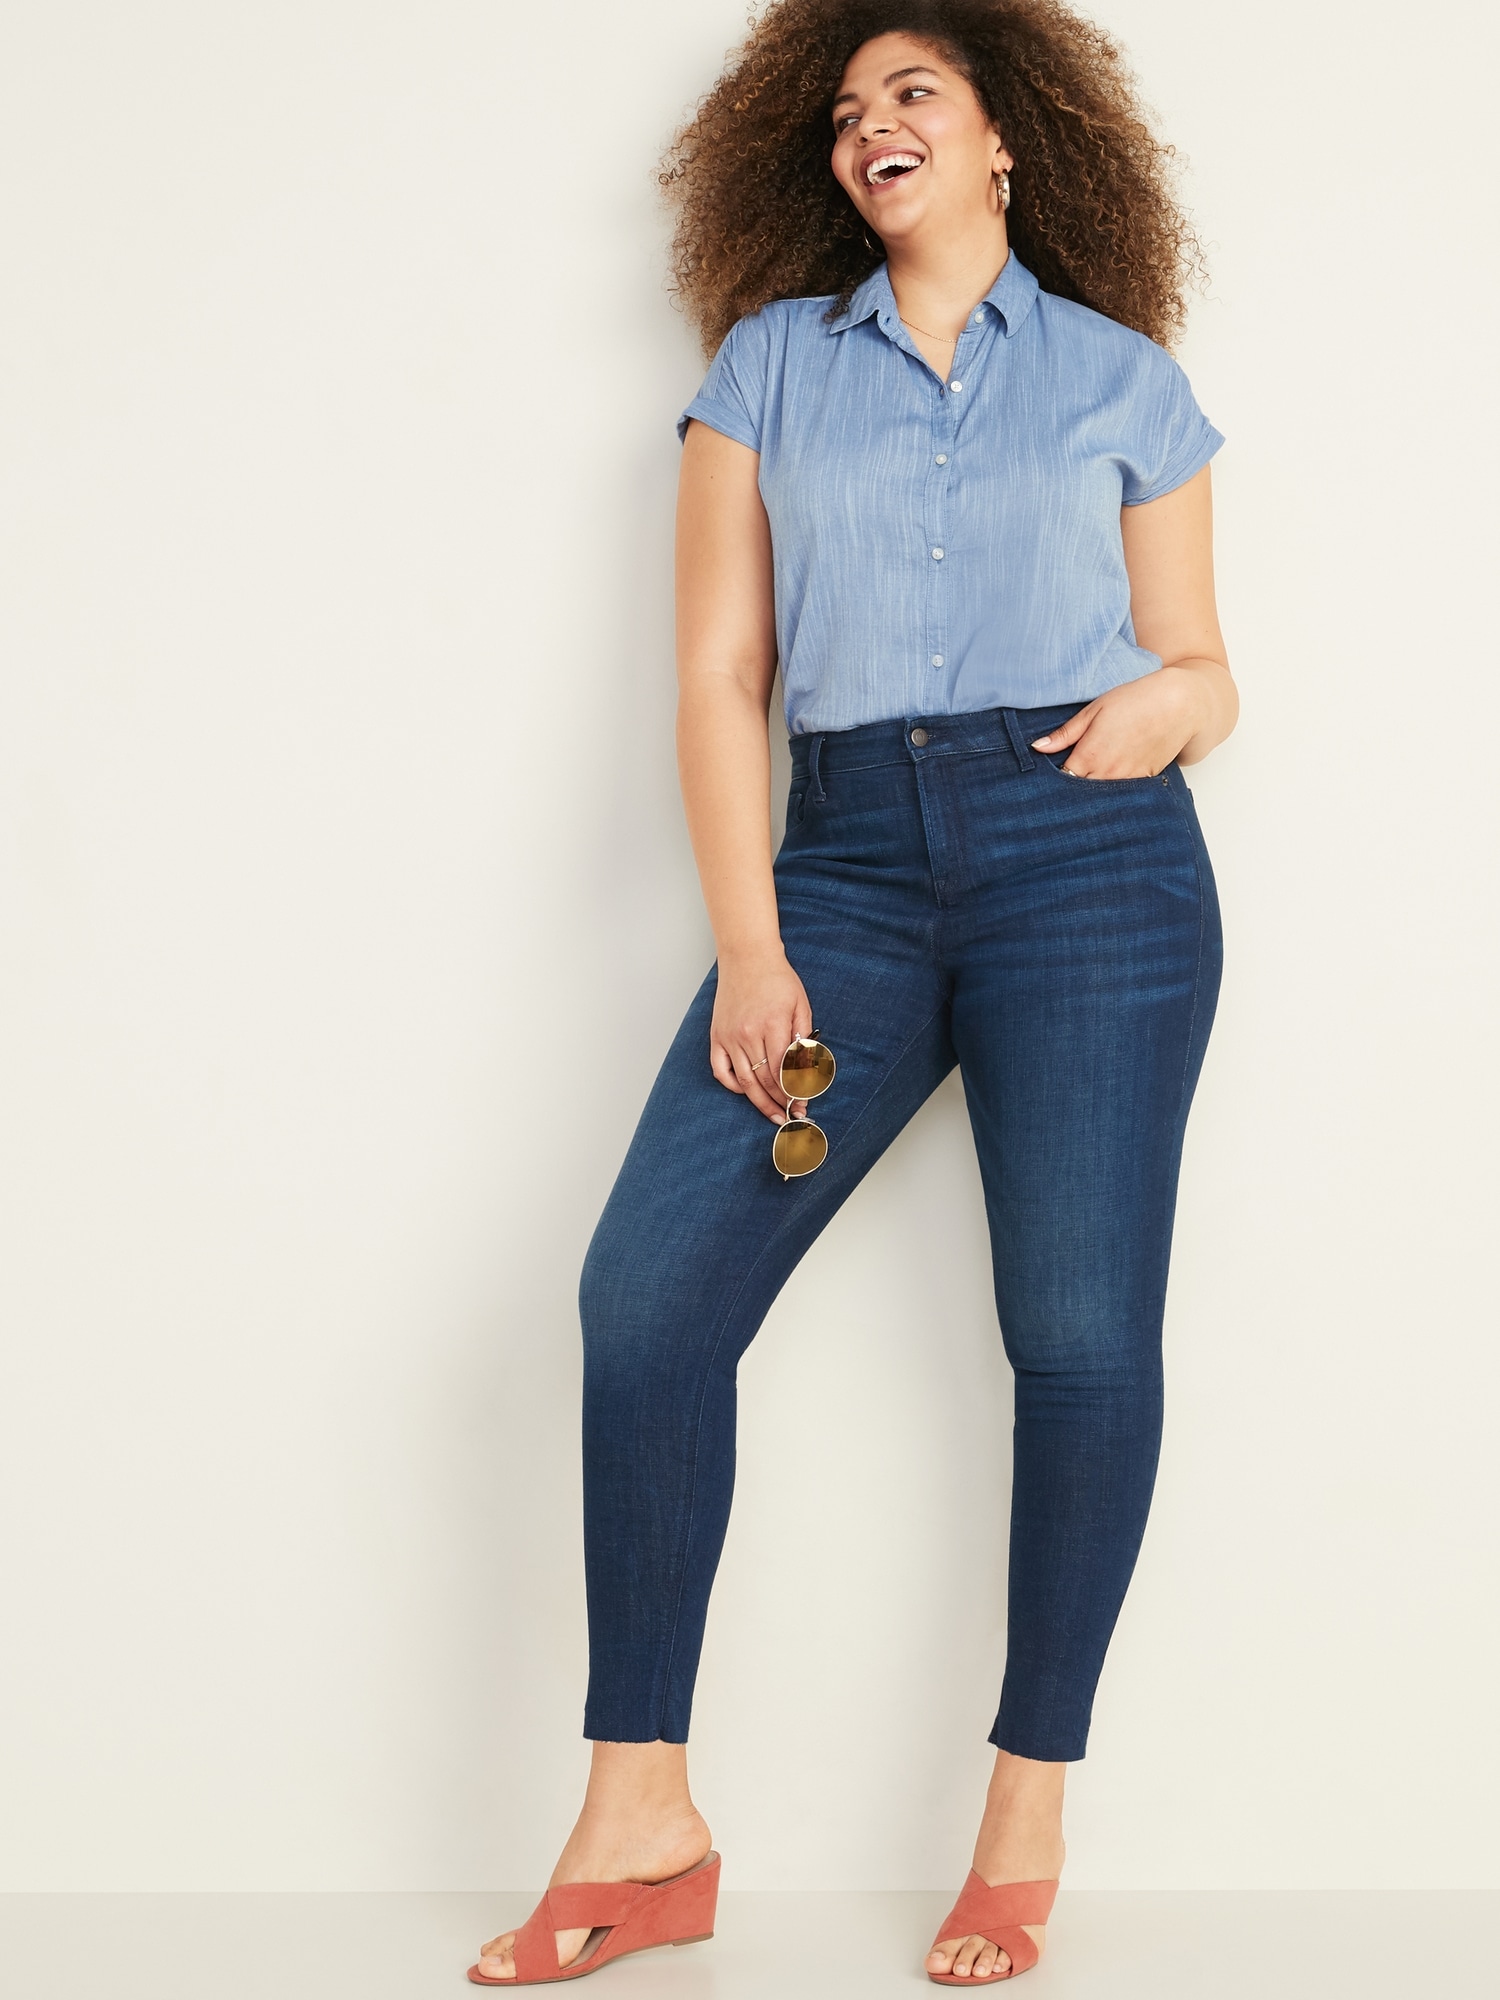 women's frayed skinny jeans